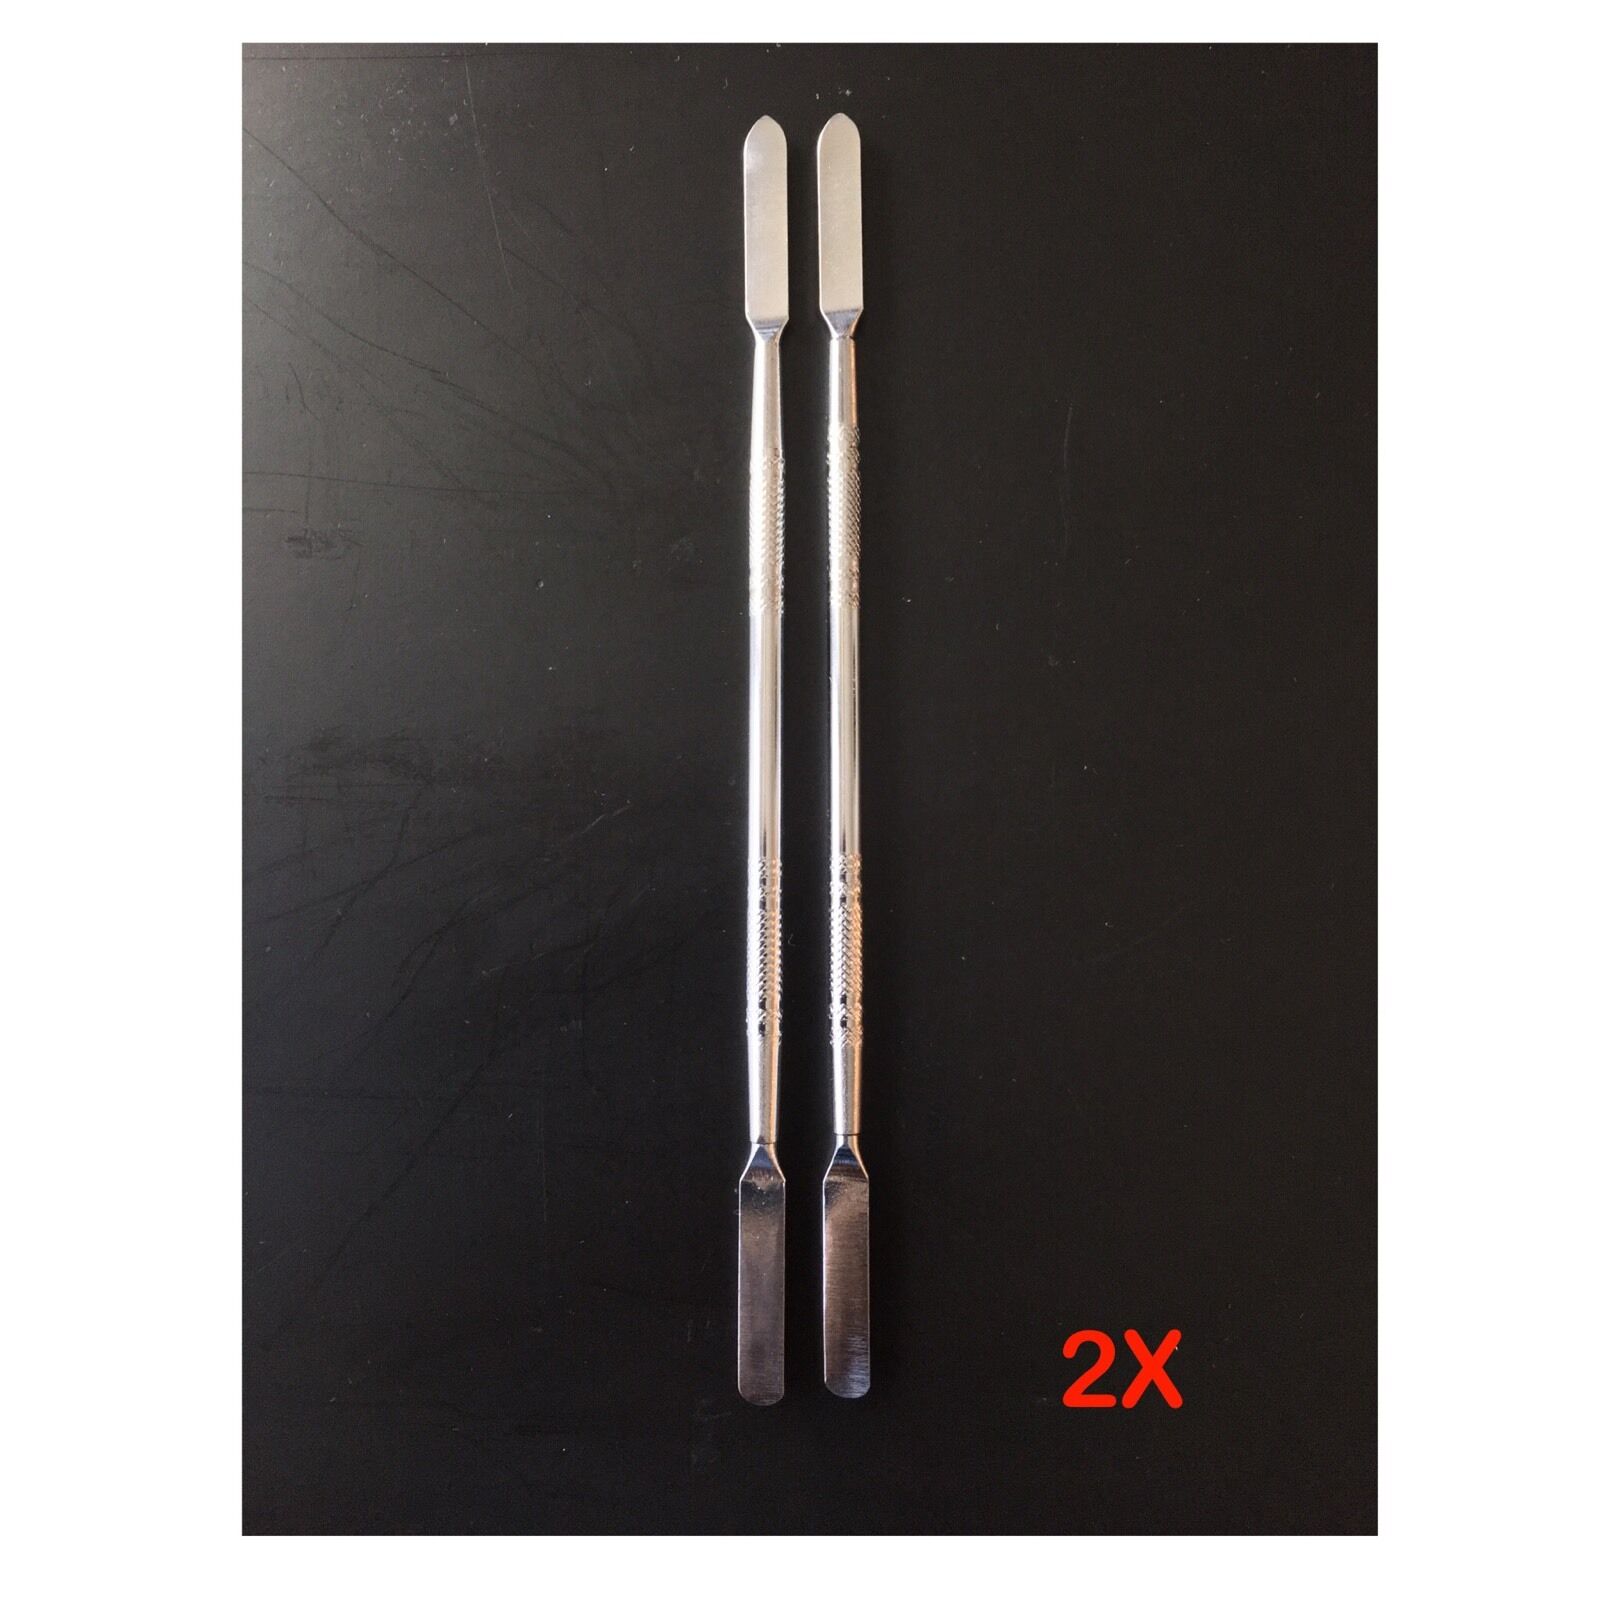 2X Metal Spudger Opening Repair Pry Tools bar iPhone, iPad Smartphone Laptop LCD